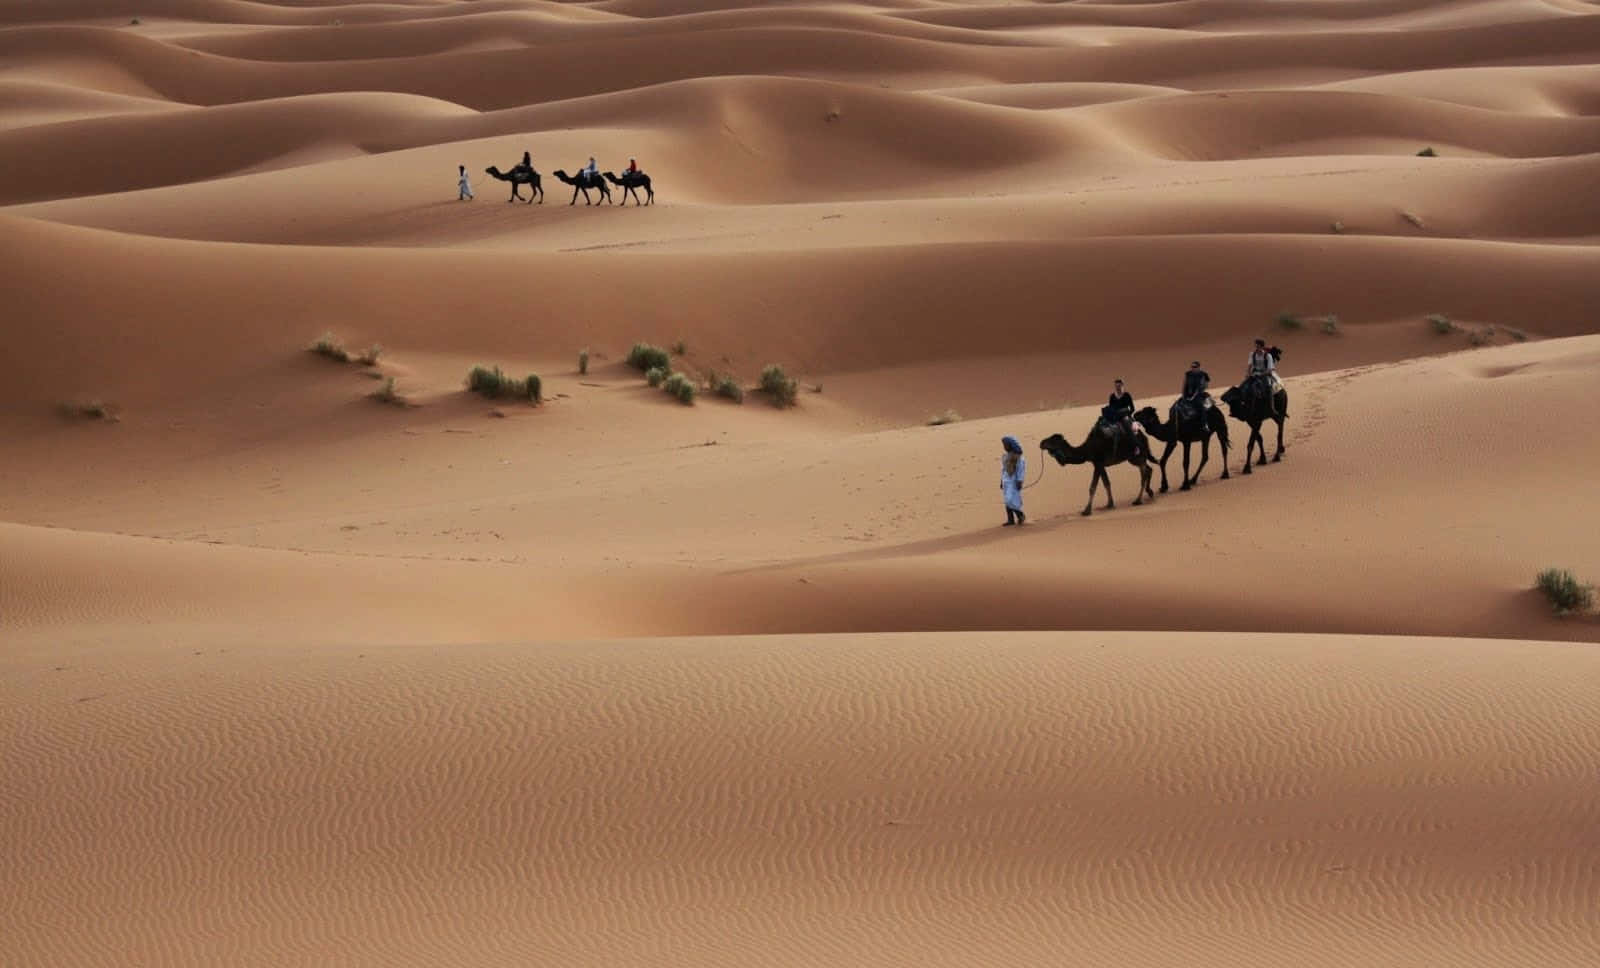 Image  A brown Camel stands atop a desert sand hill